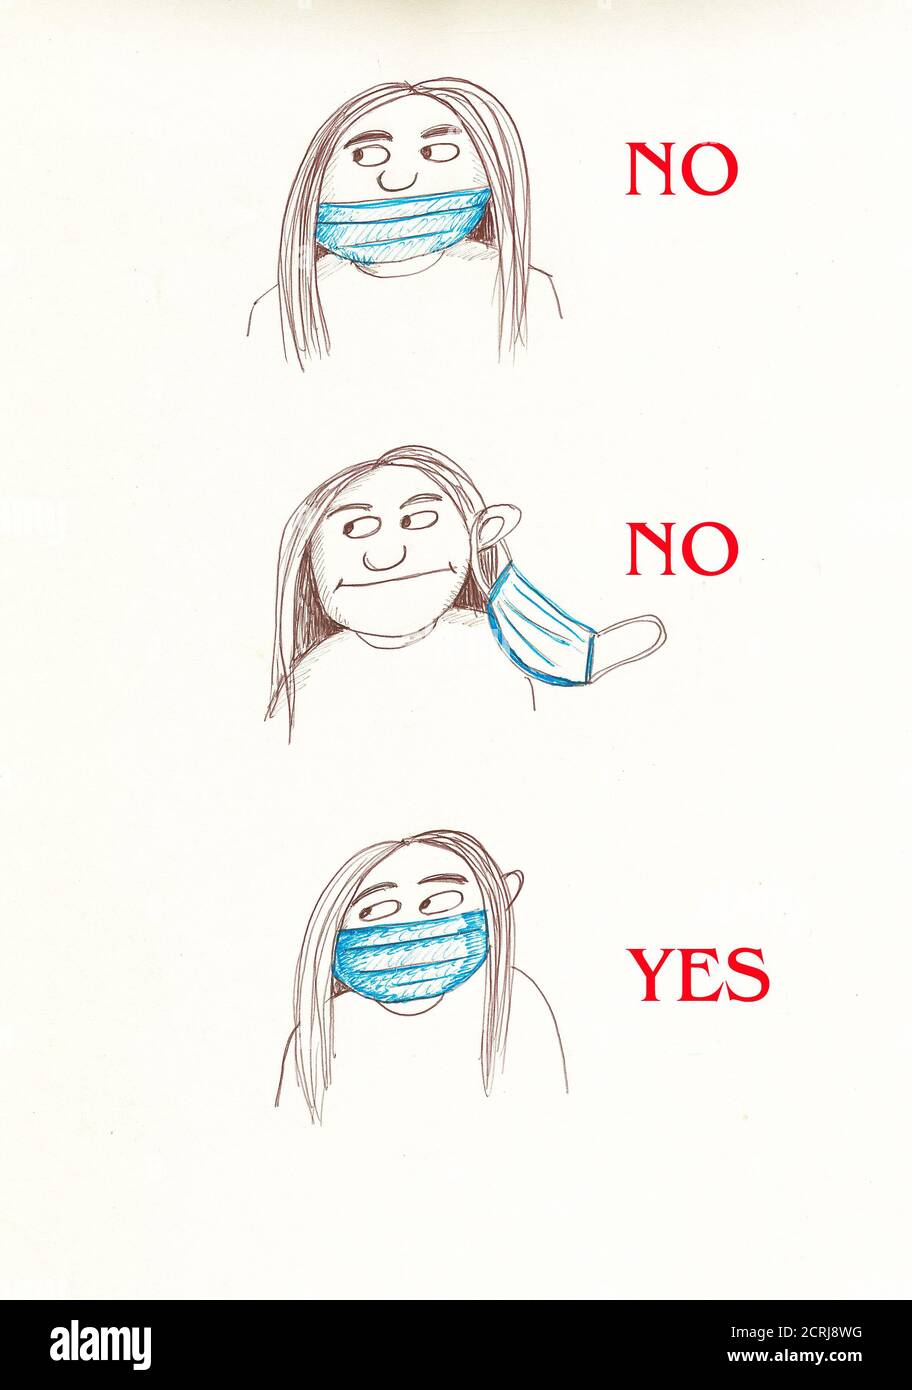 How to use mask. Illustration. Stock Photo